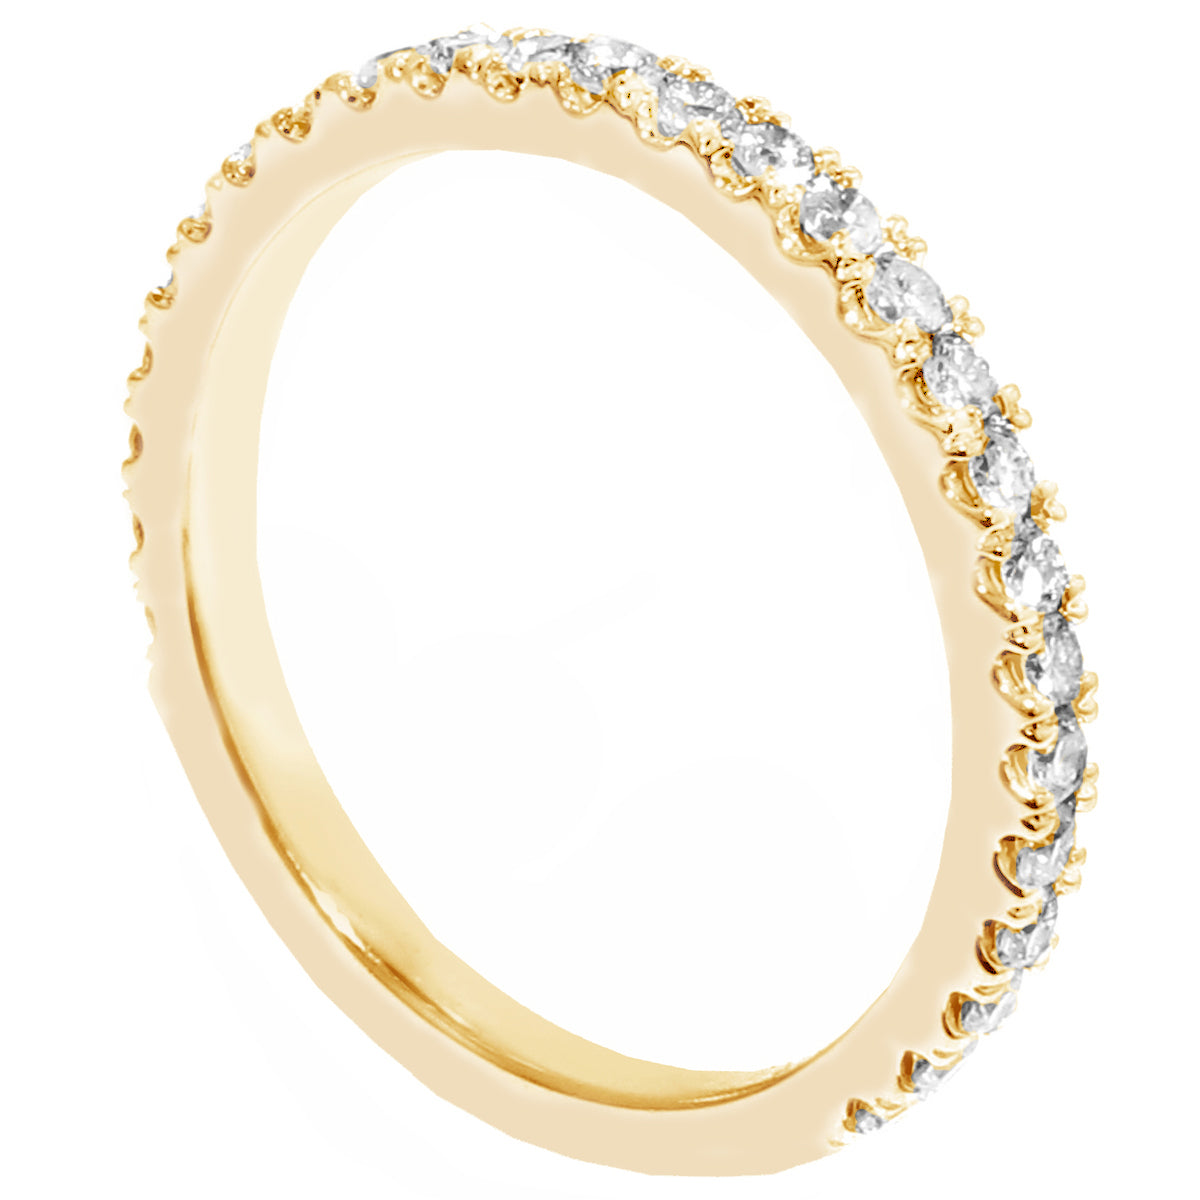 0.65 CT Pave Set Diamond Encrusted Wedding Band in 14k White/Yellow/Rose Gold